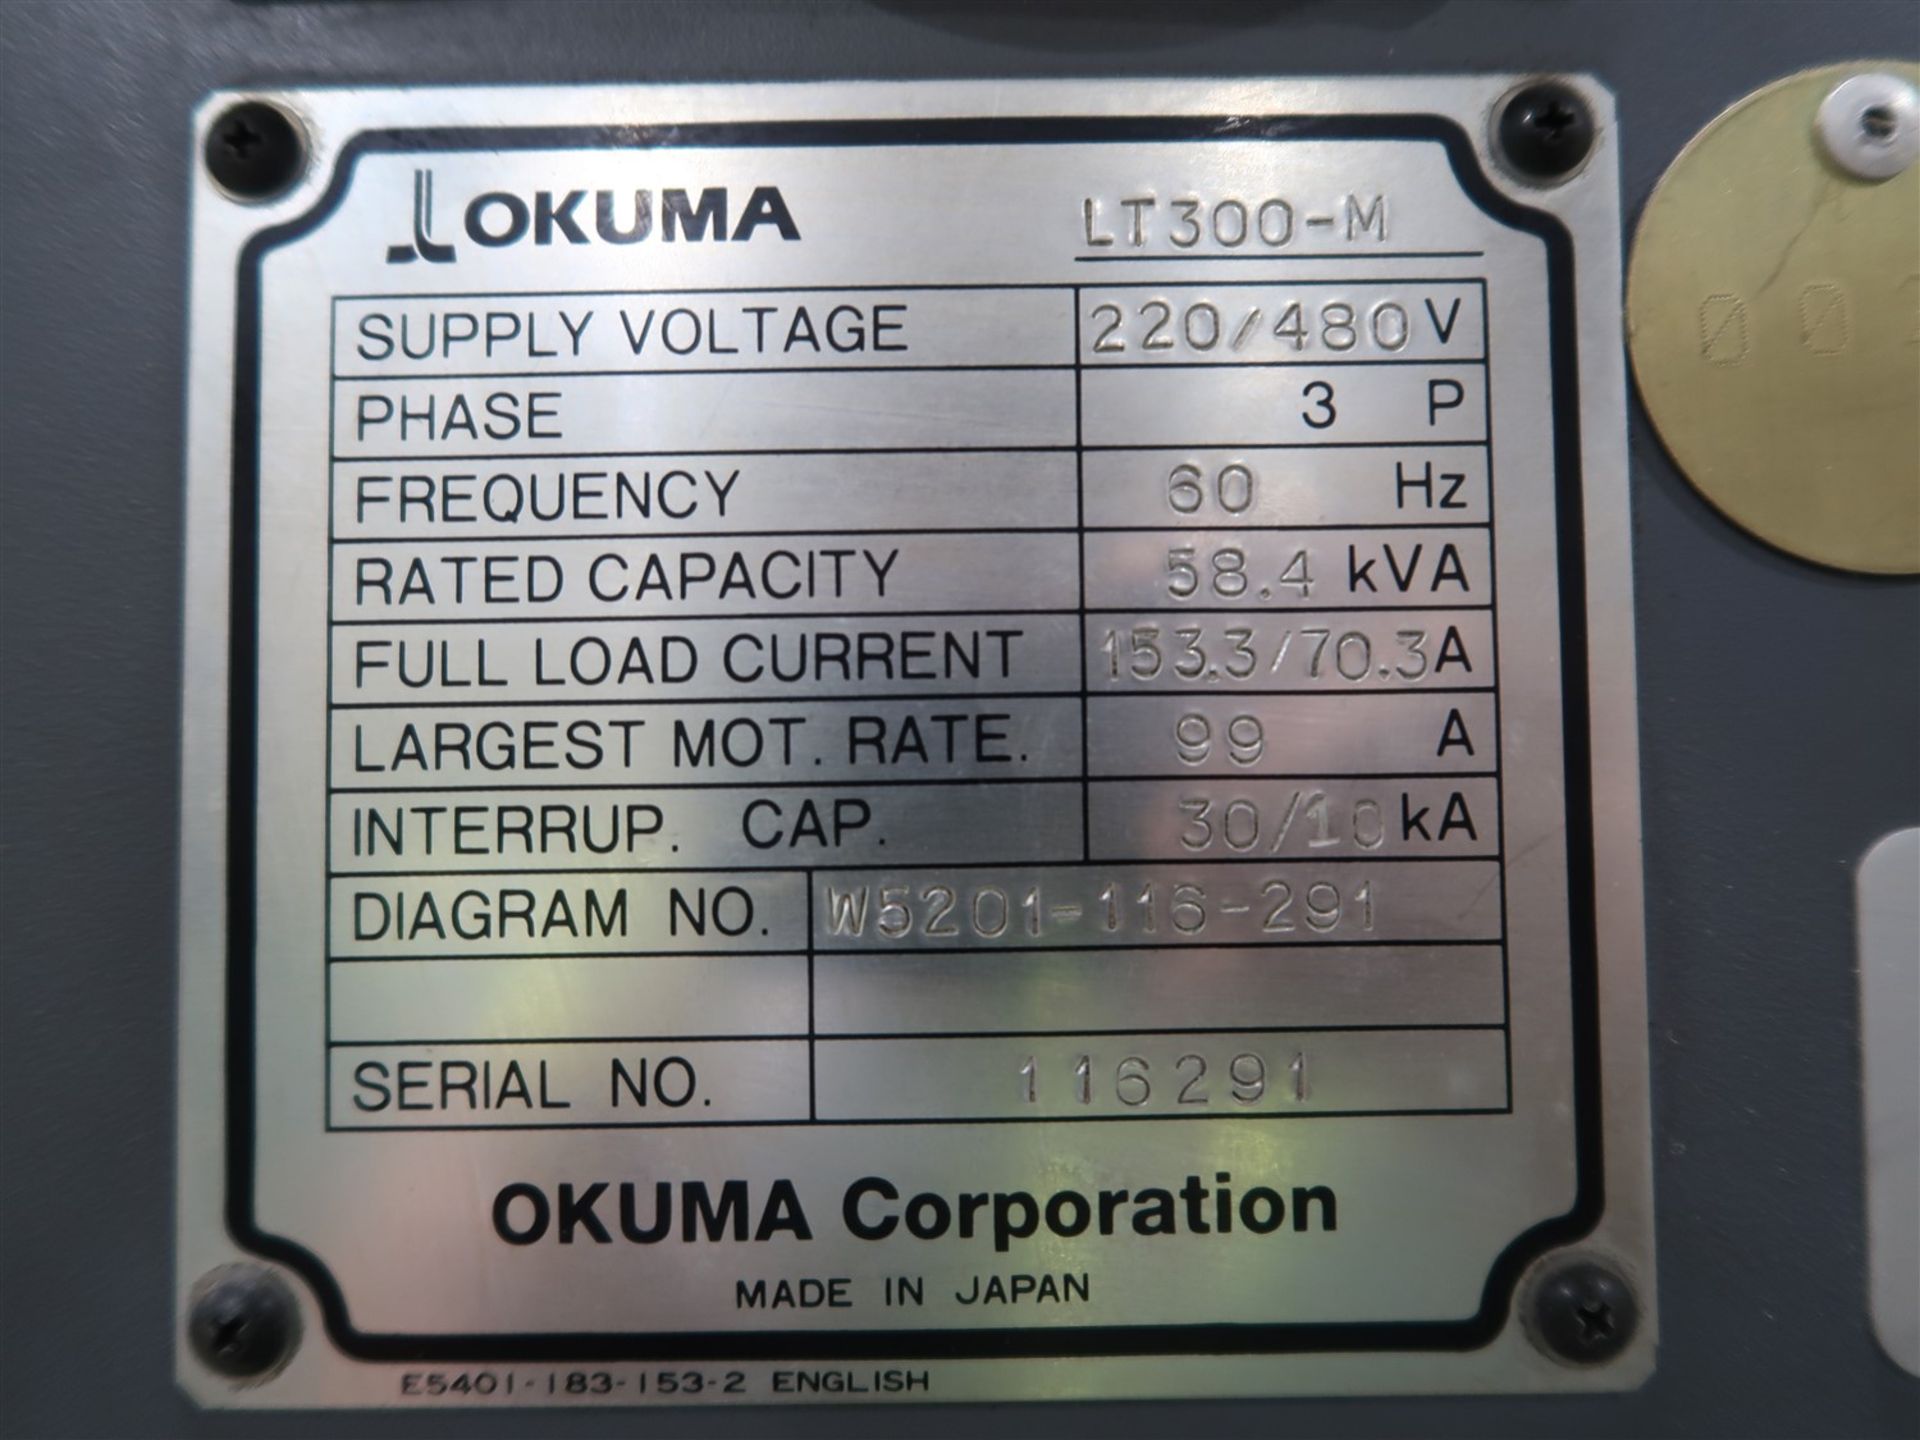 2005 OKUMA LT-300M TWIN STAR CNC HORIZONTAL TURNING CENTER, OKUMA OSP - 100 CNC CONTROLLER, 2X 12- - Image 21 of 21